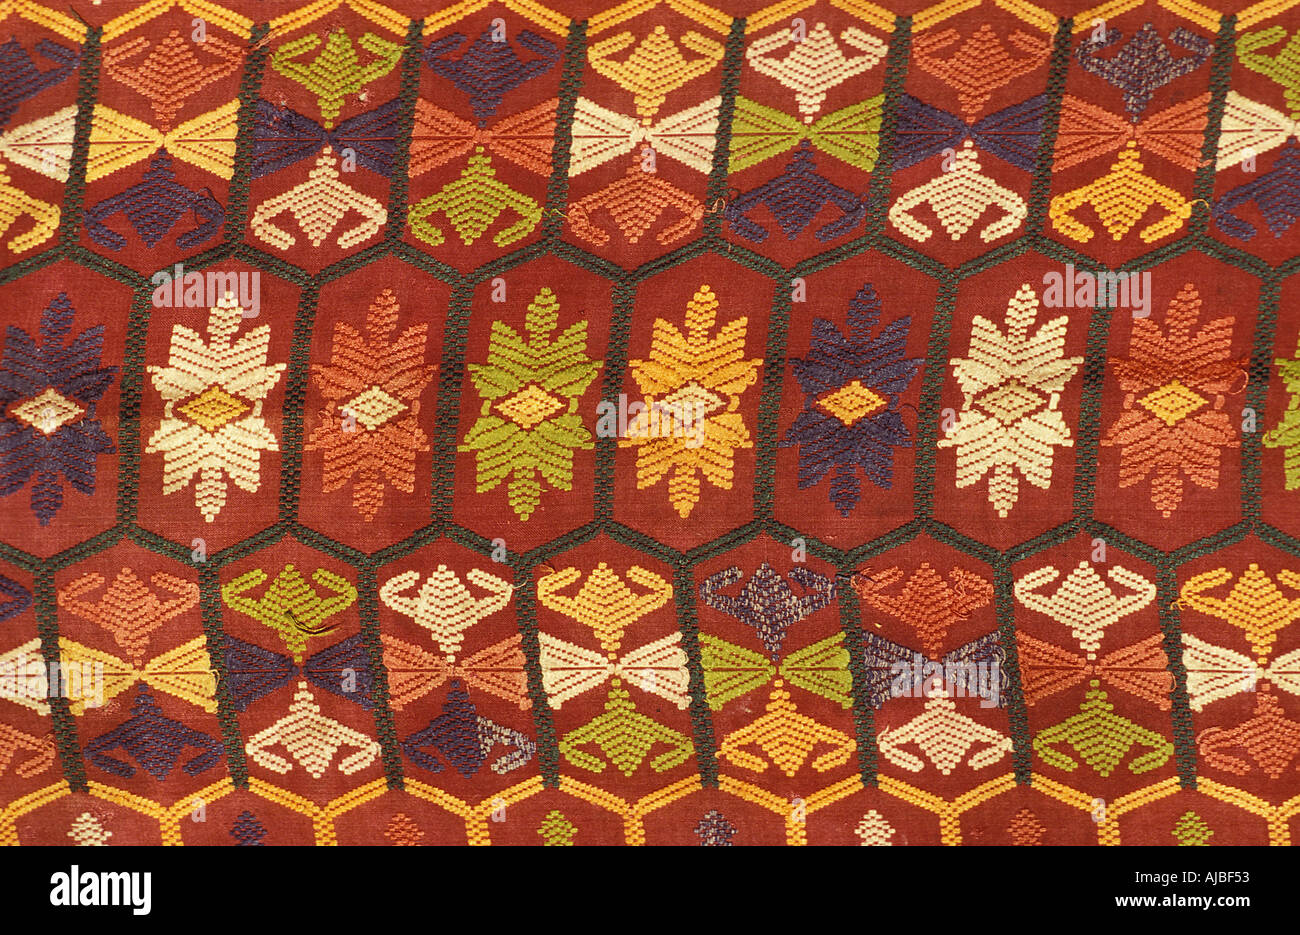 Brocaded Balinese fabric Stock Photo